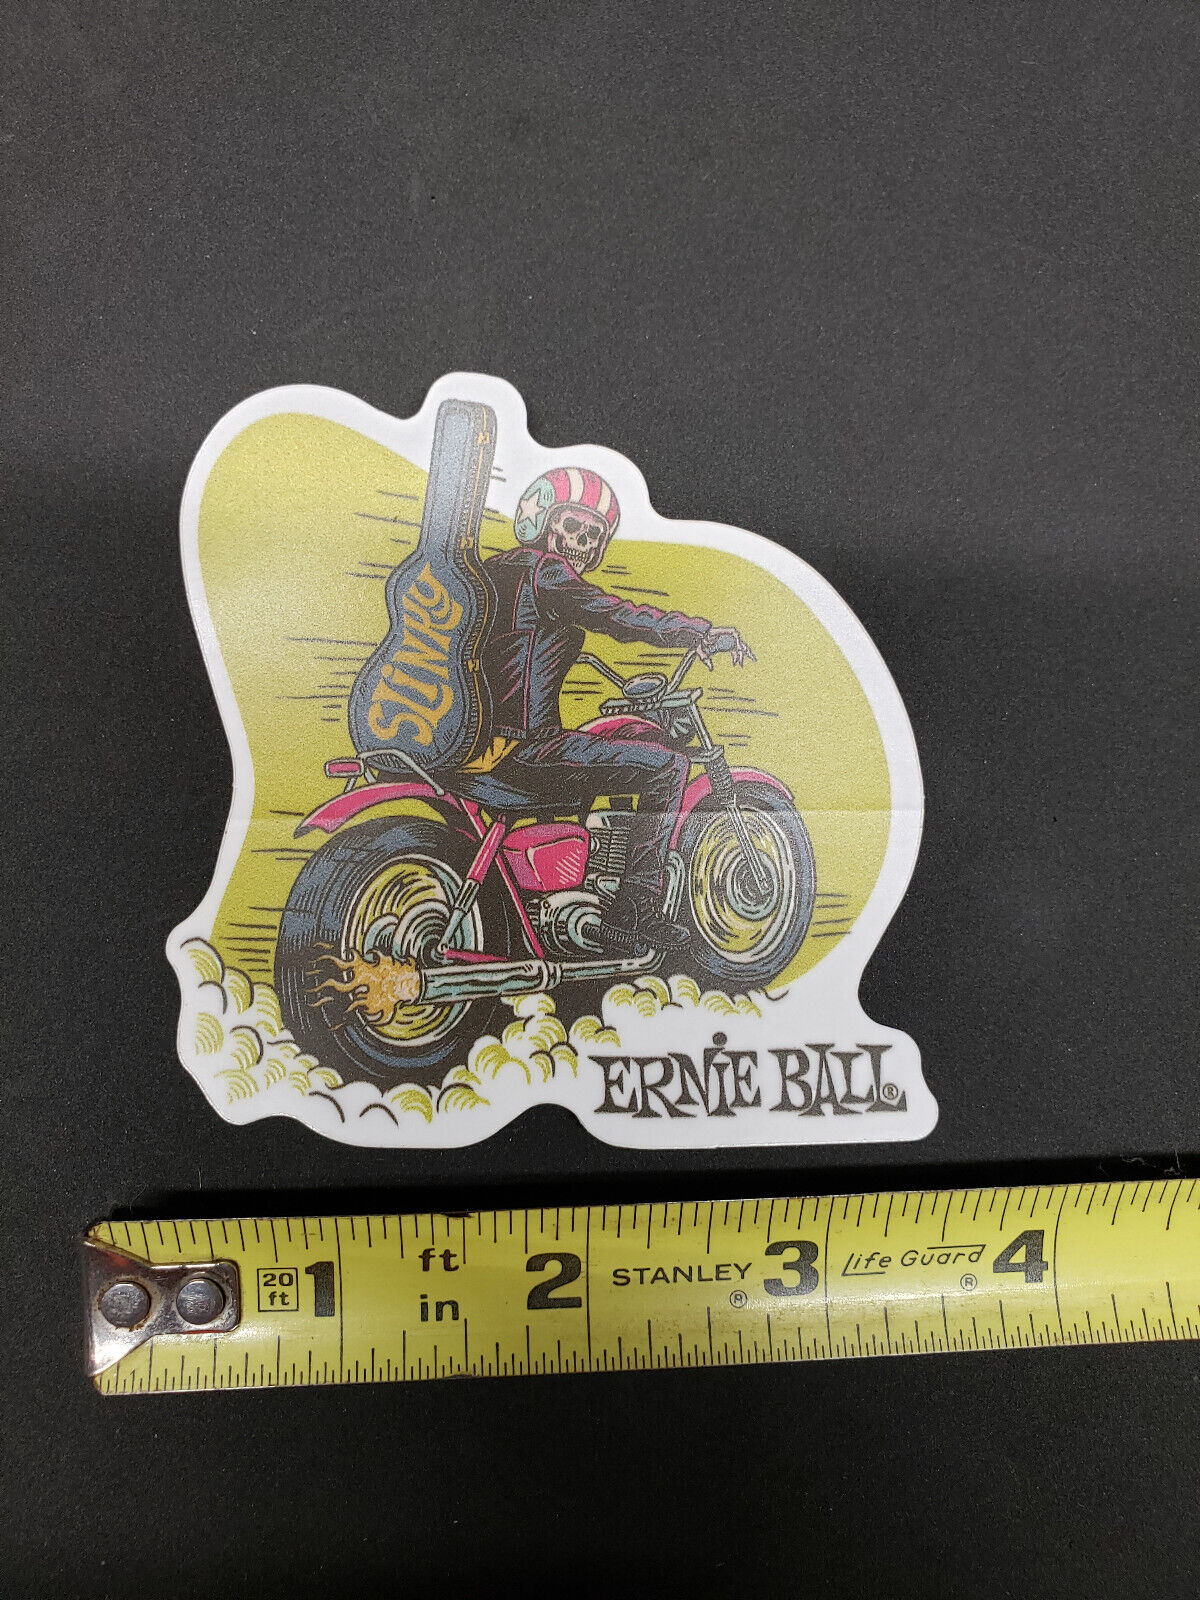 Ernie Ball Slinky Gost Rider guitar strings Sticker